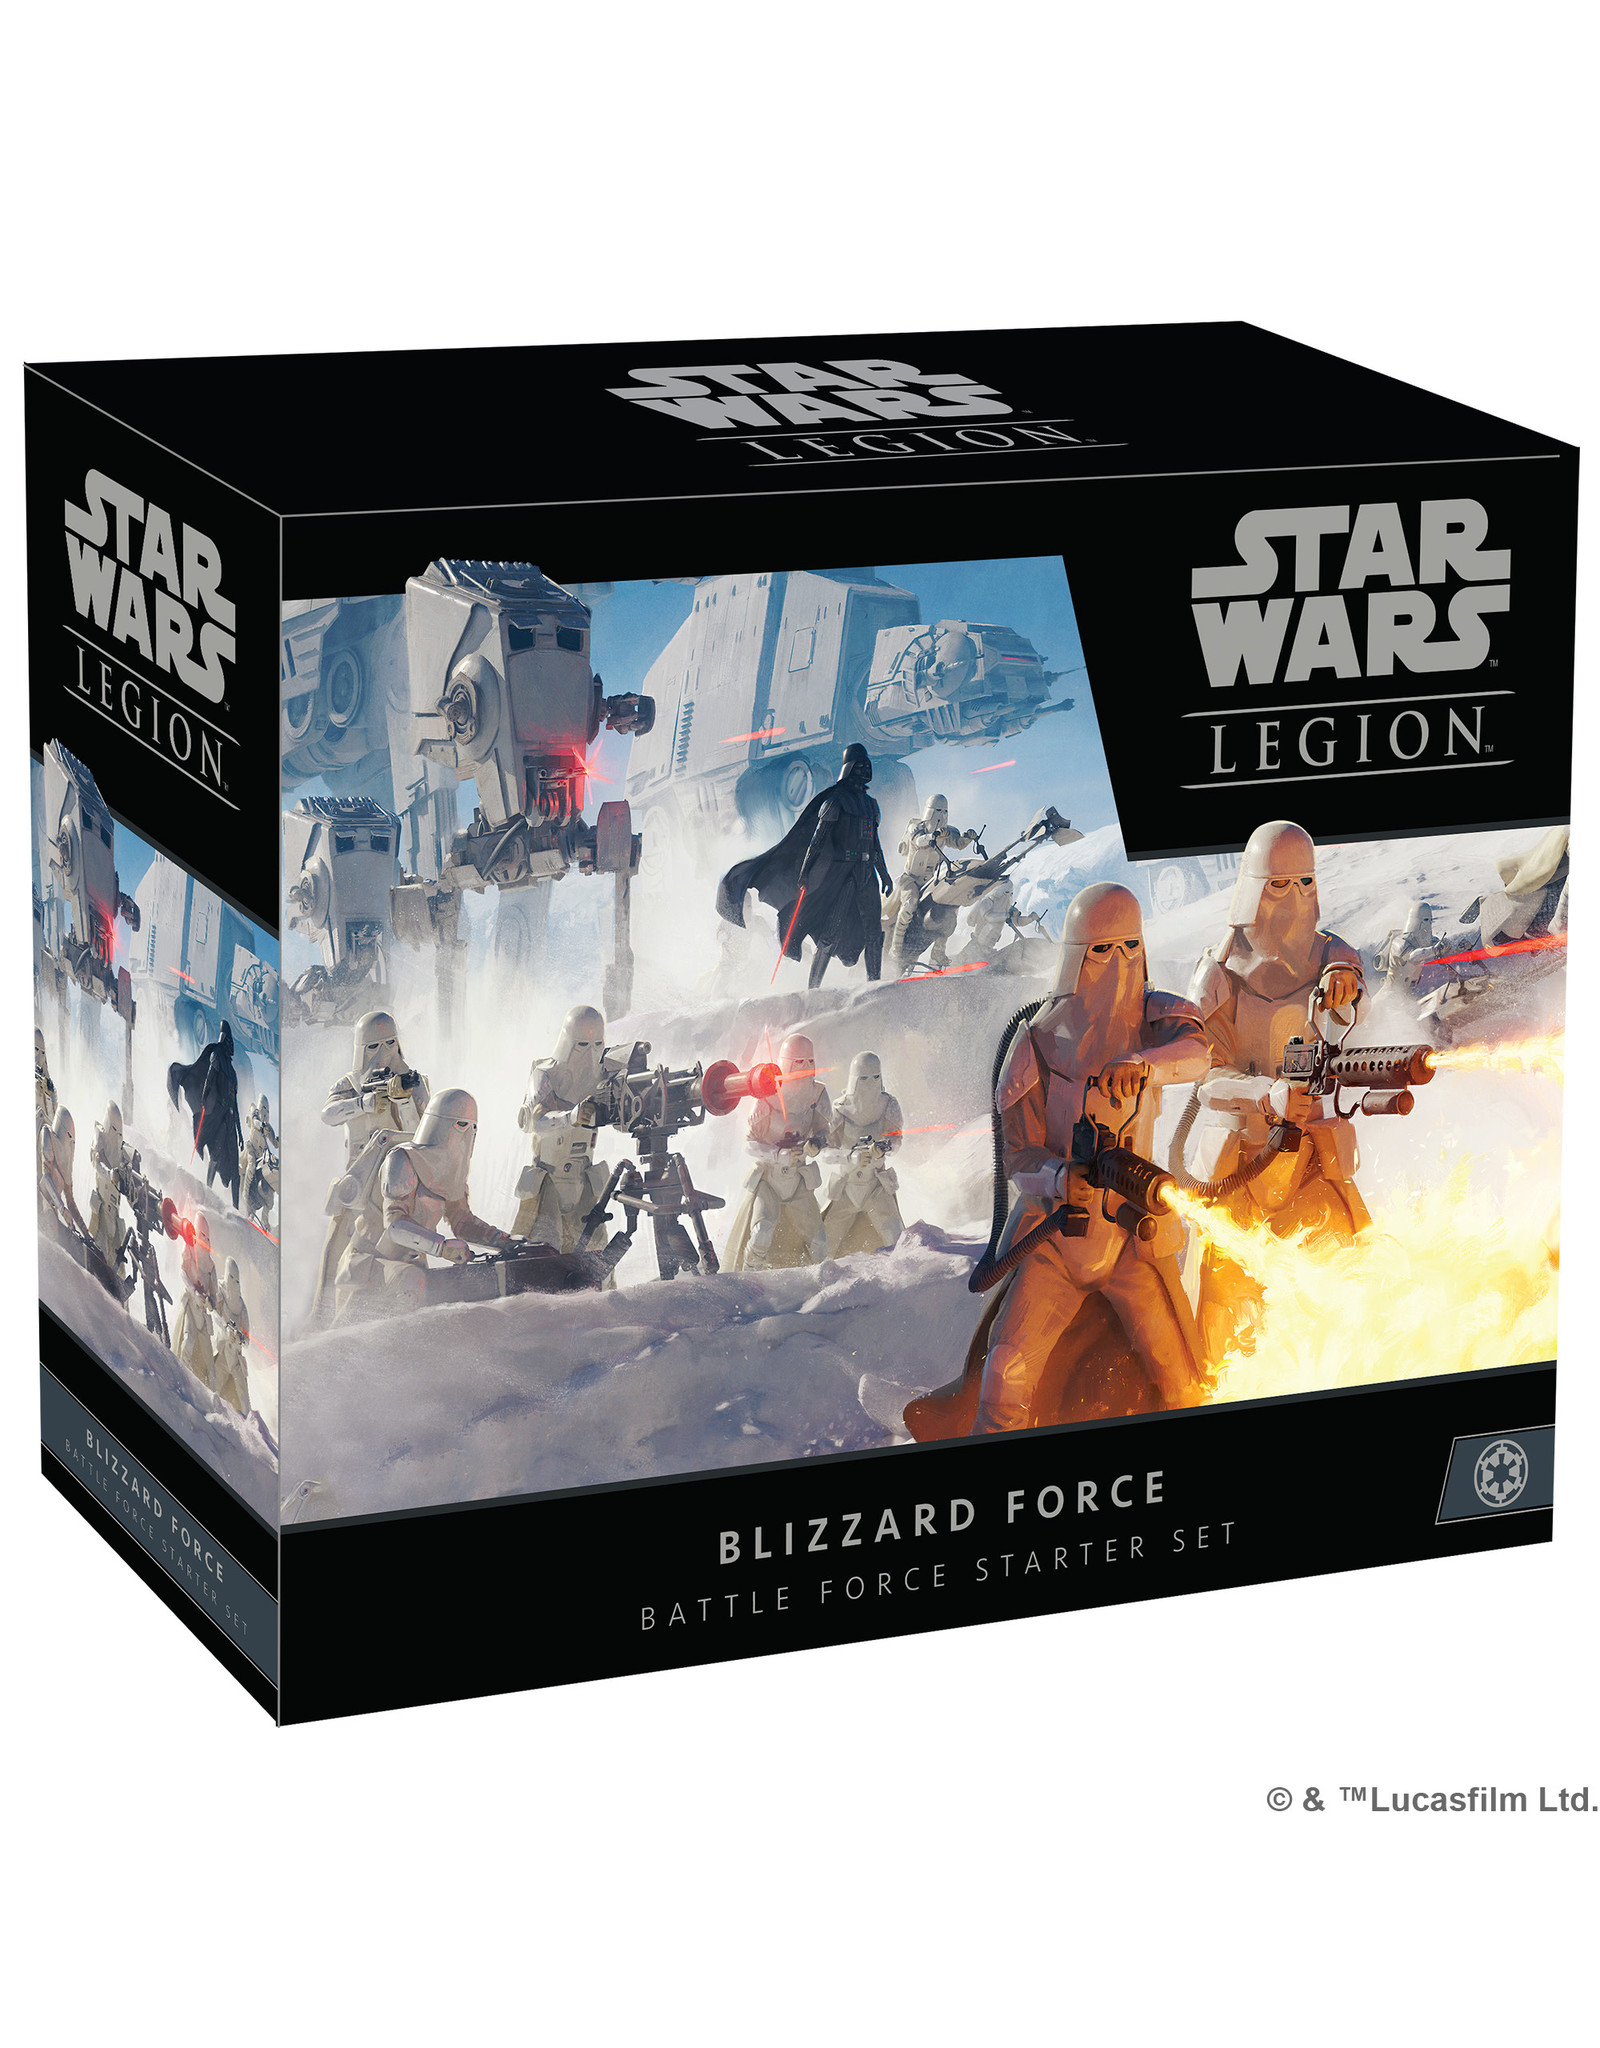 STAR WARS LEGION Star Wars Legion Blizzard Force Battle Force Starter Set